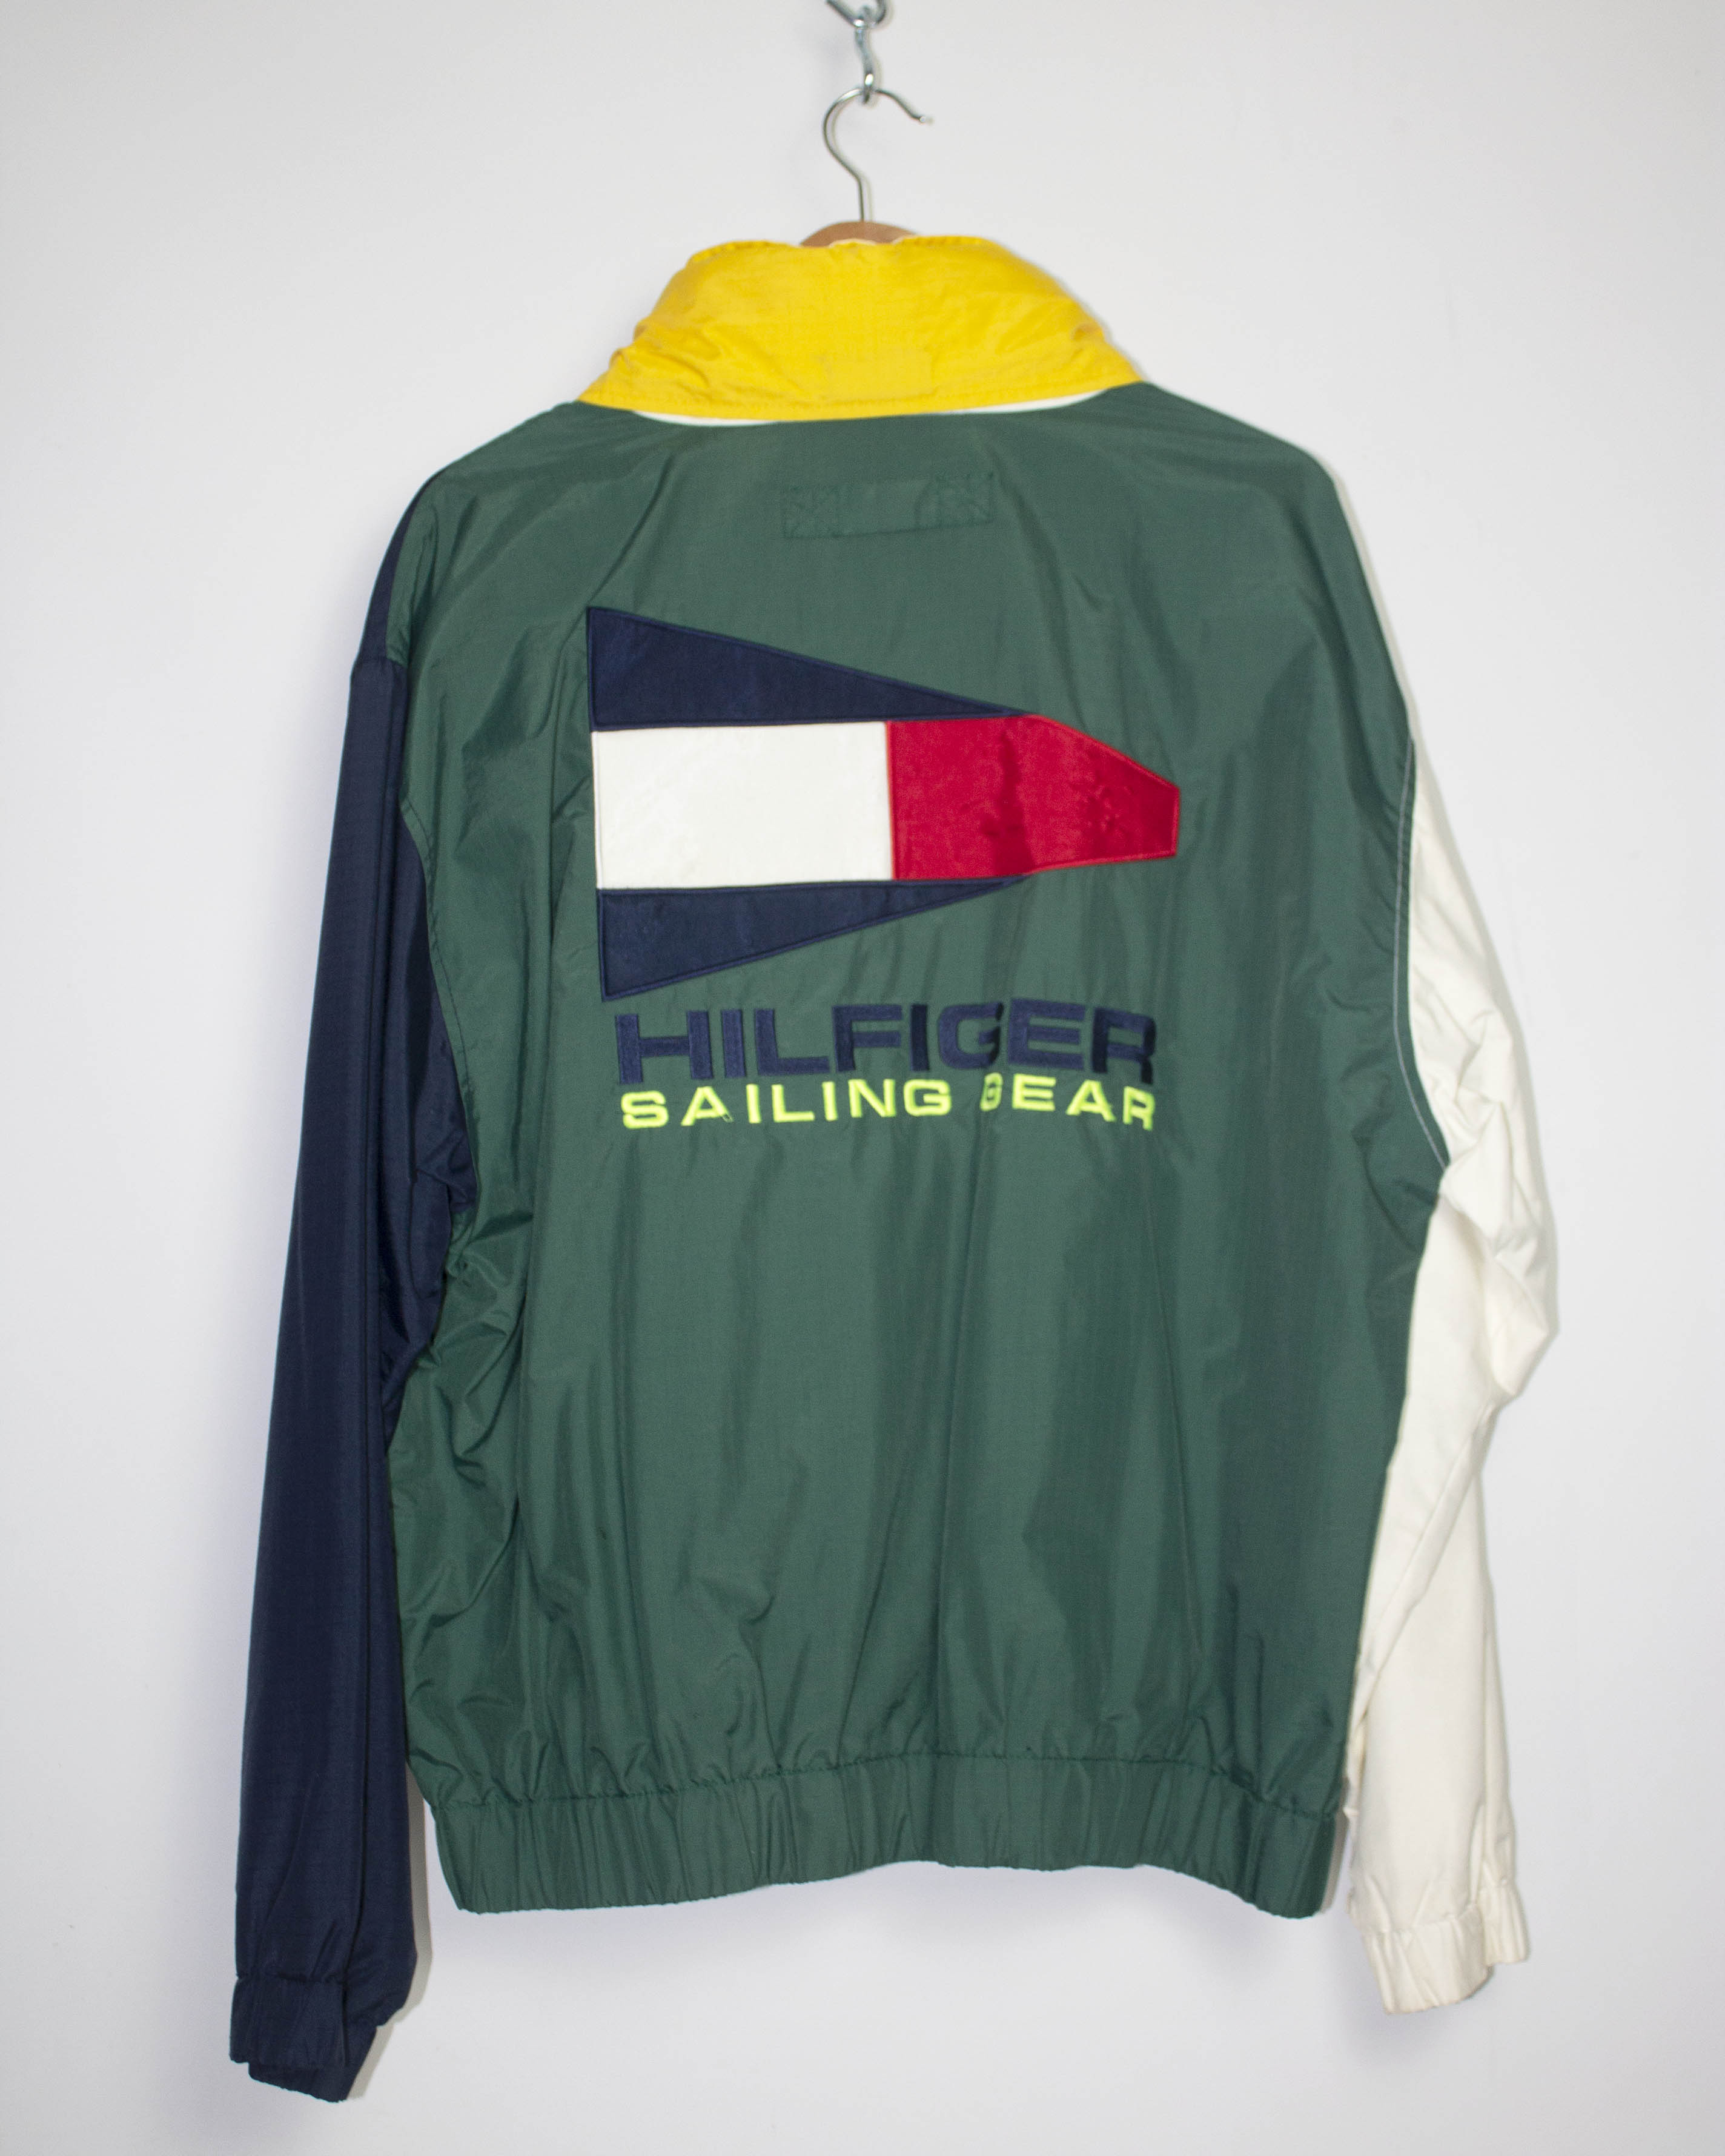 Vintage Tommy Hilfiger Sailing Gear Jacket Sz L